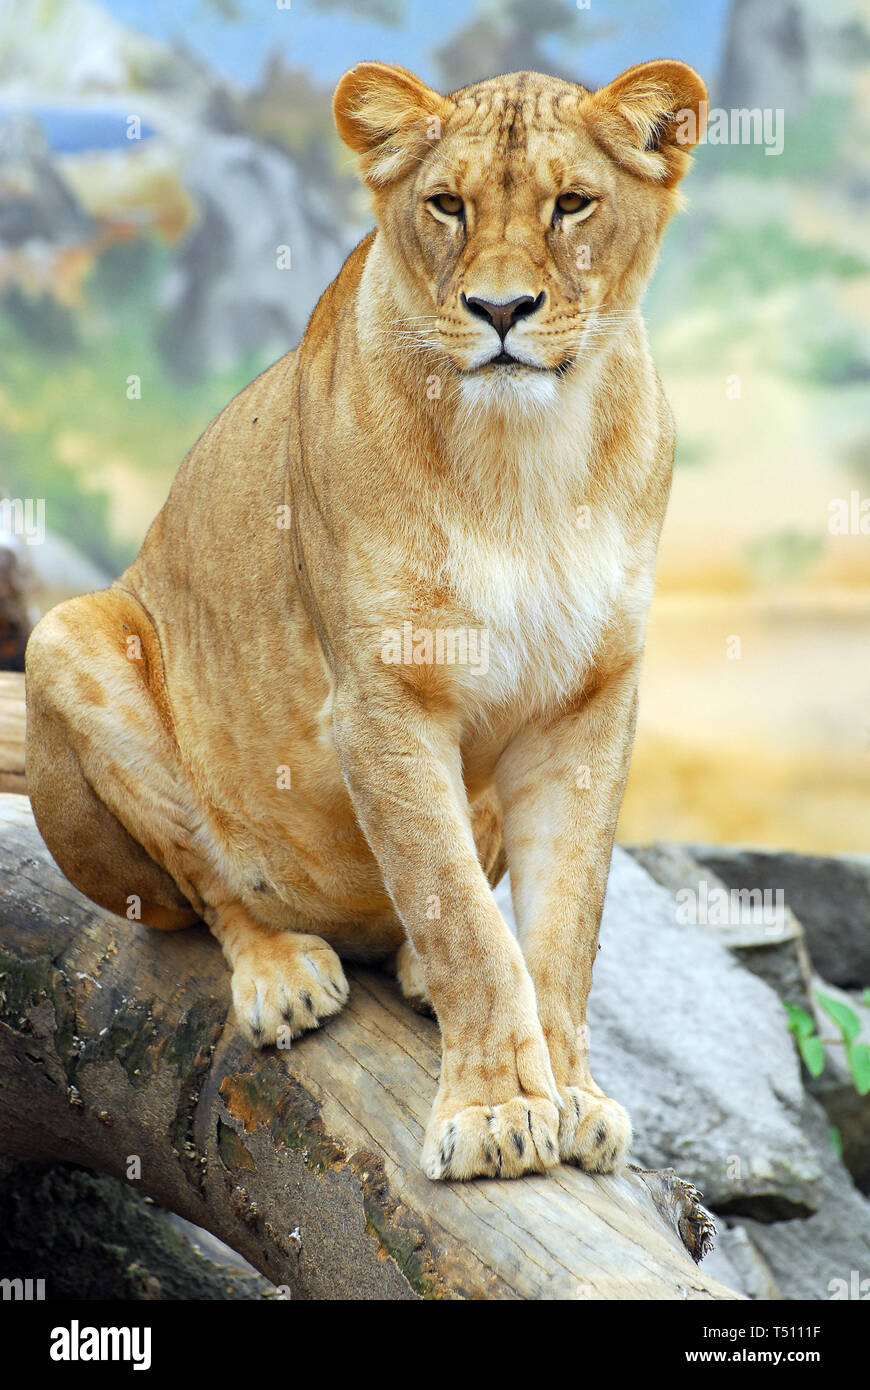 Southwest African lion or Katanga Lion, Angola-Löwe oder Katanga-Löwe, Löwe, Panthera leo bleyenberghi, angolai oroszlán Stock Photo